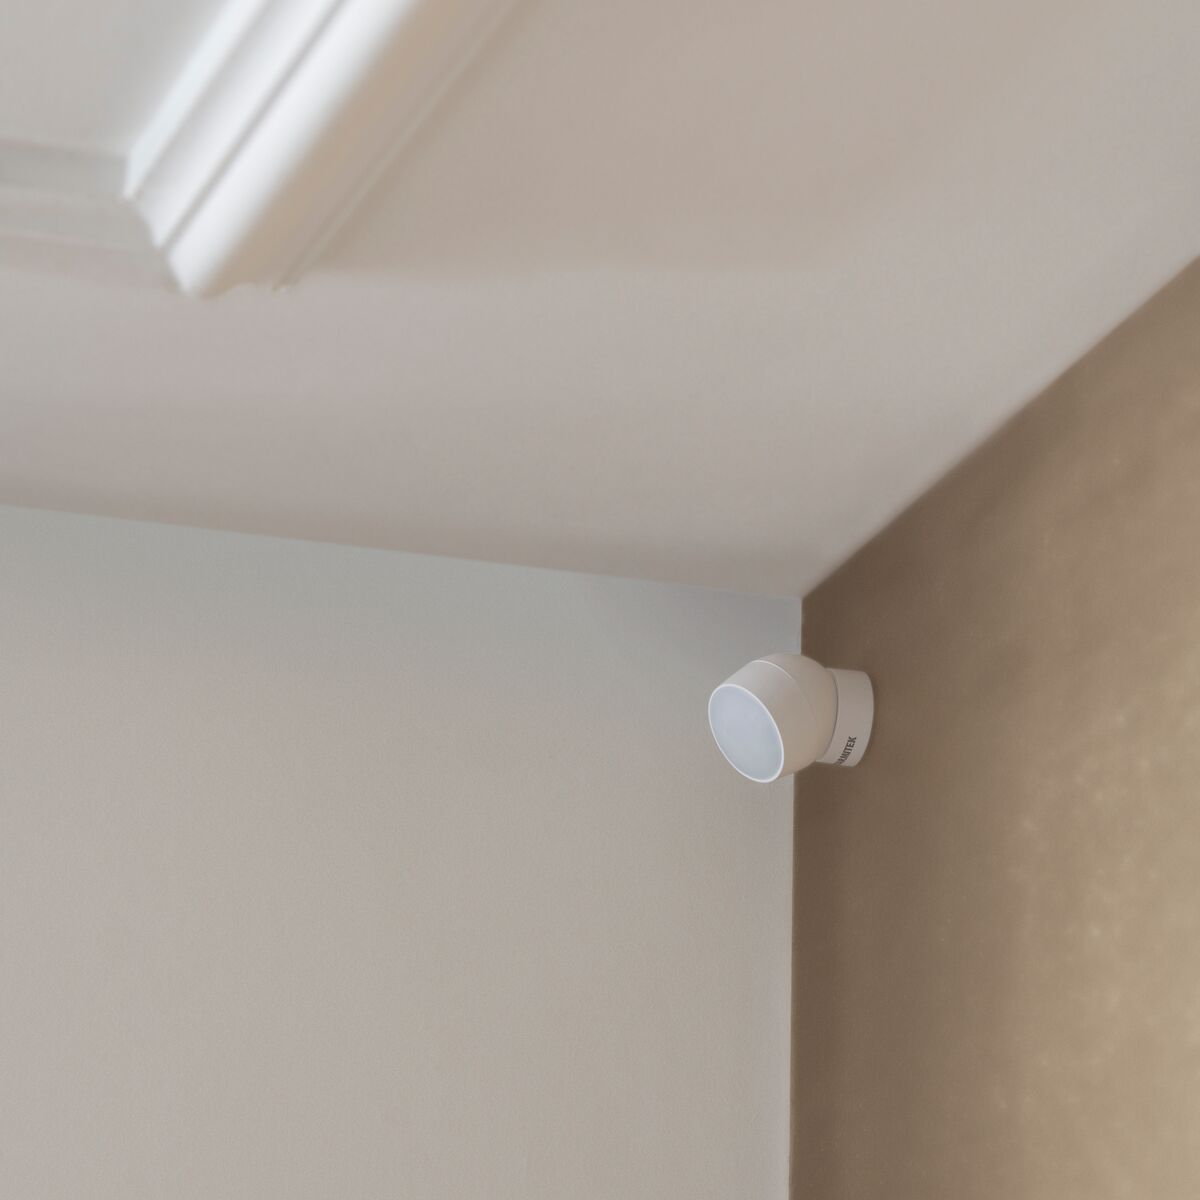 Sense ME - Zigbee motion sensor - Ambianze Image of a Zigbee sensor mounted in a top corner on the wall | Marmitek